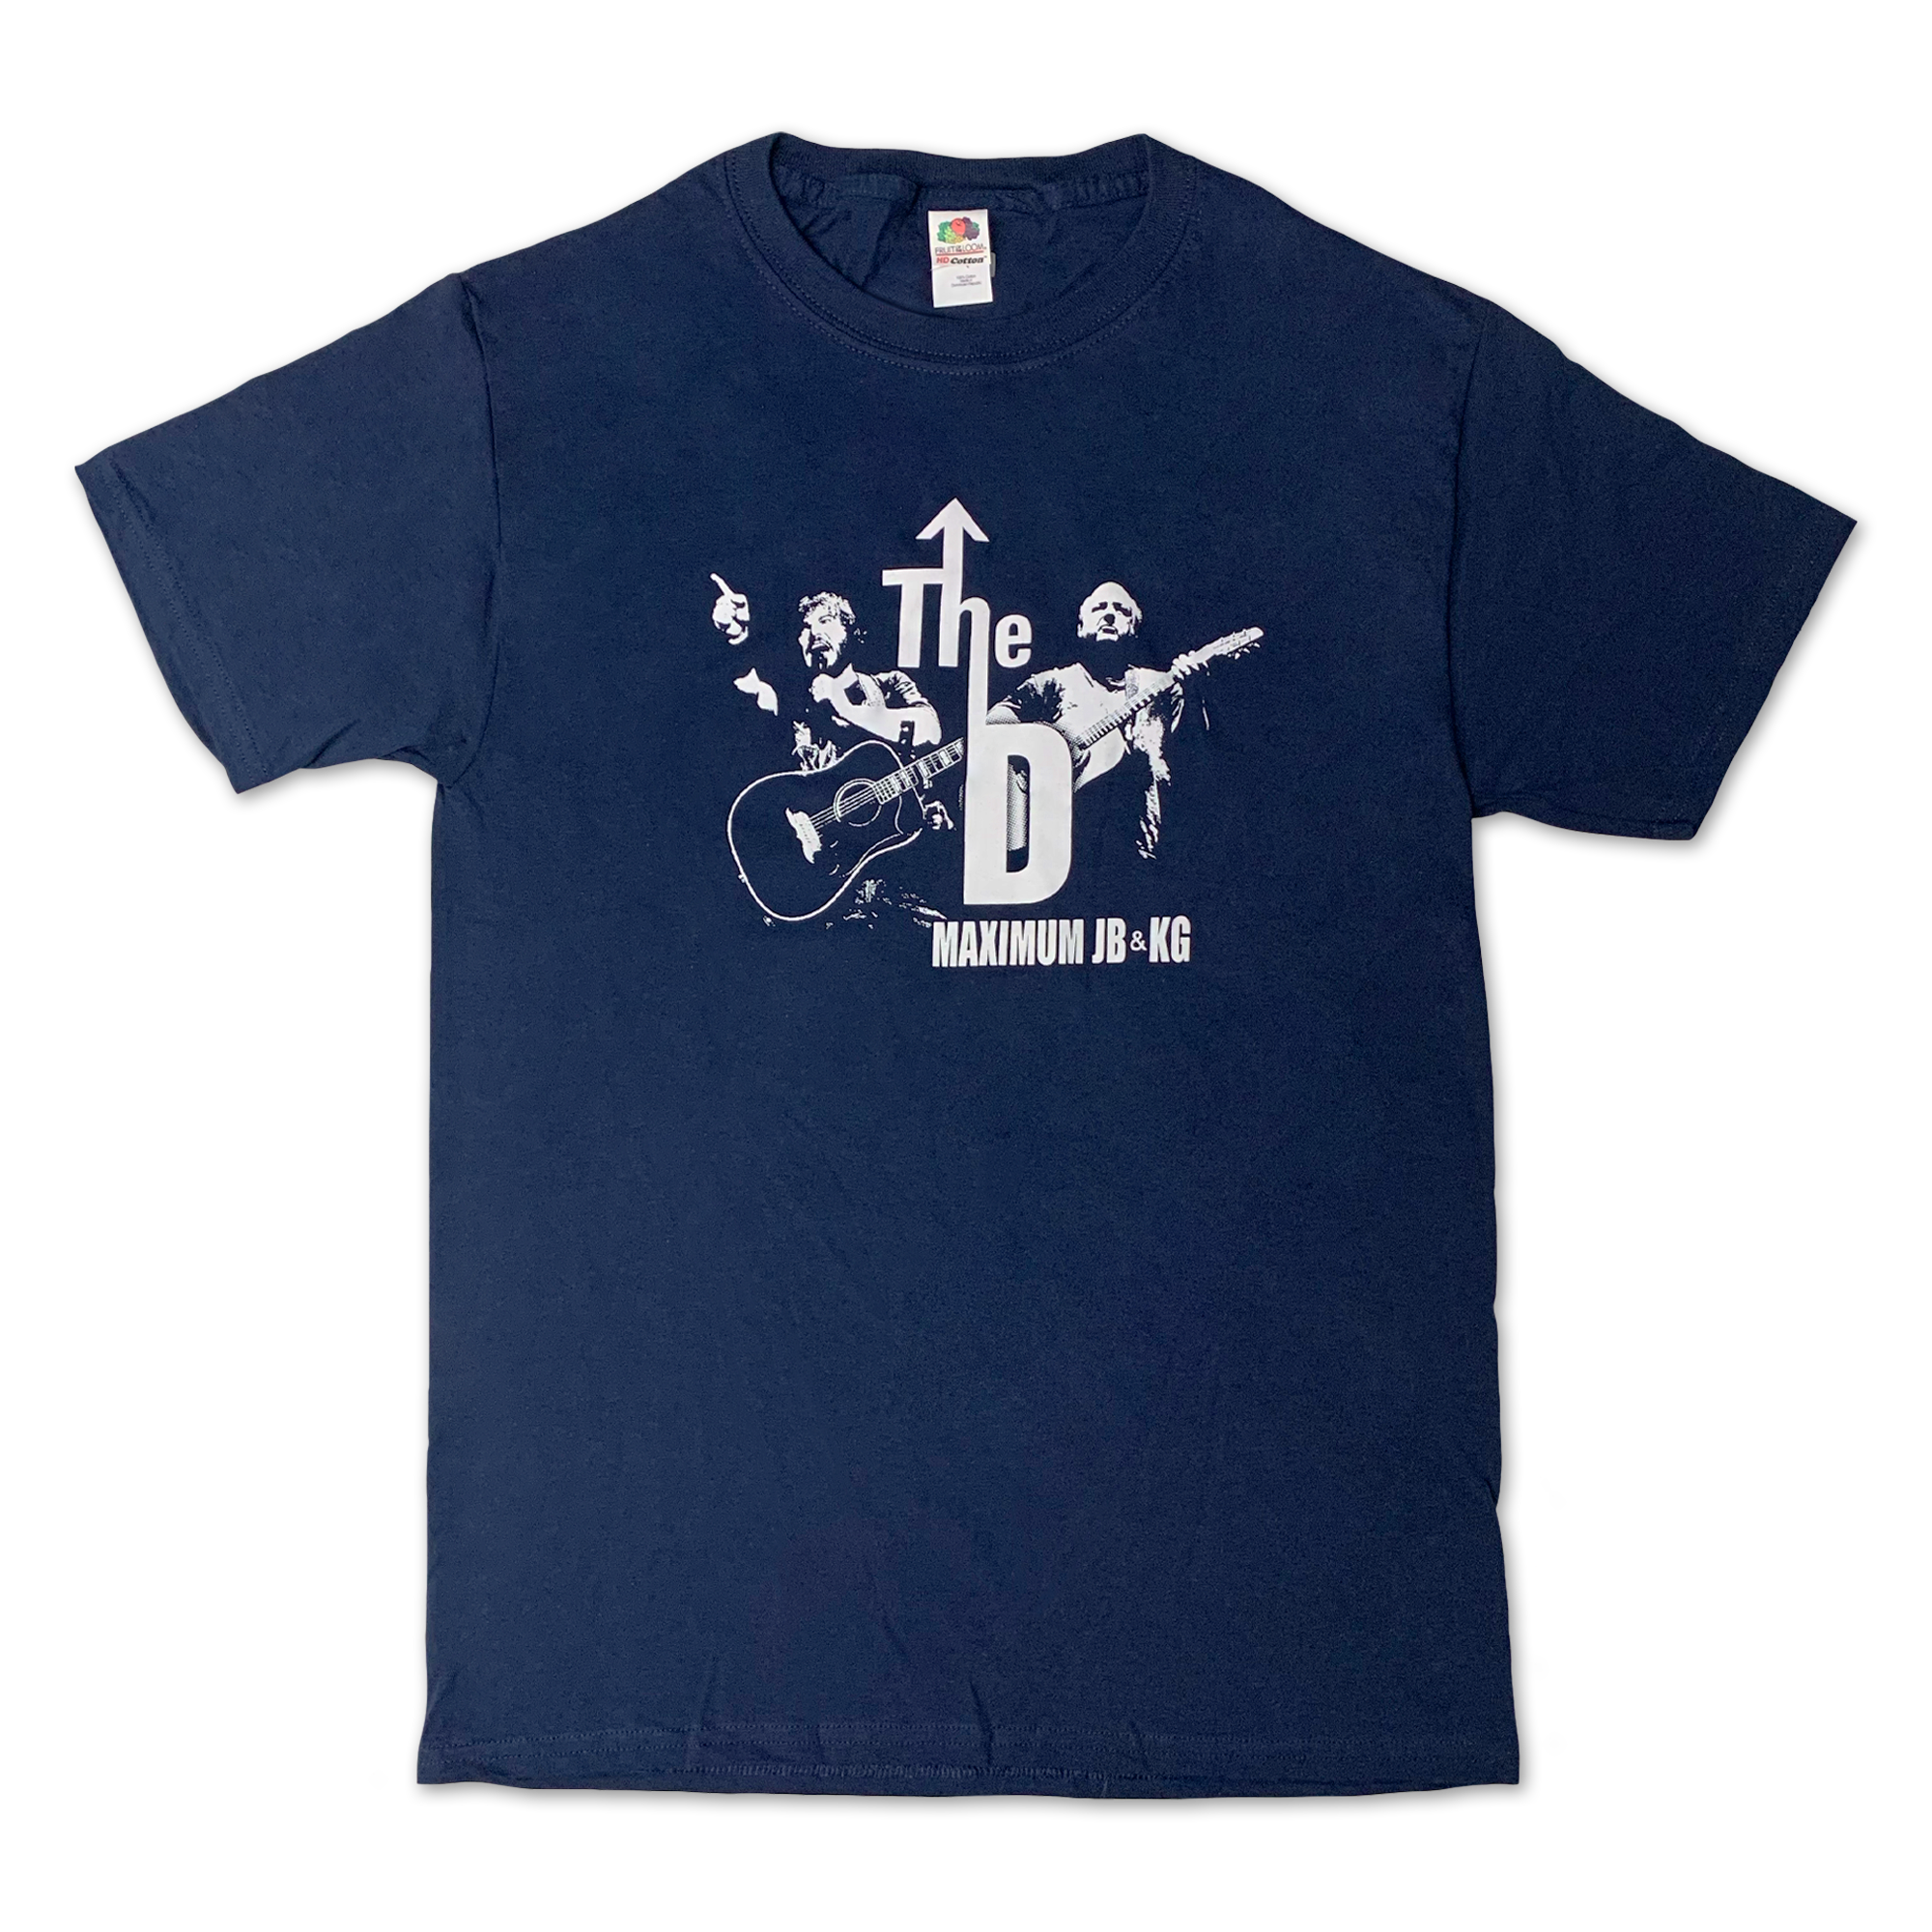 Maximum JB & KG (Navy) T-shirt